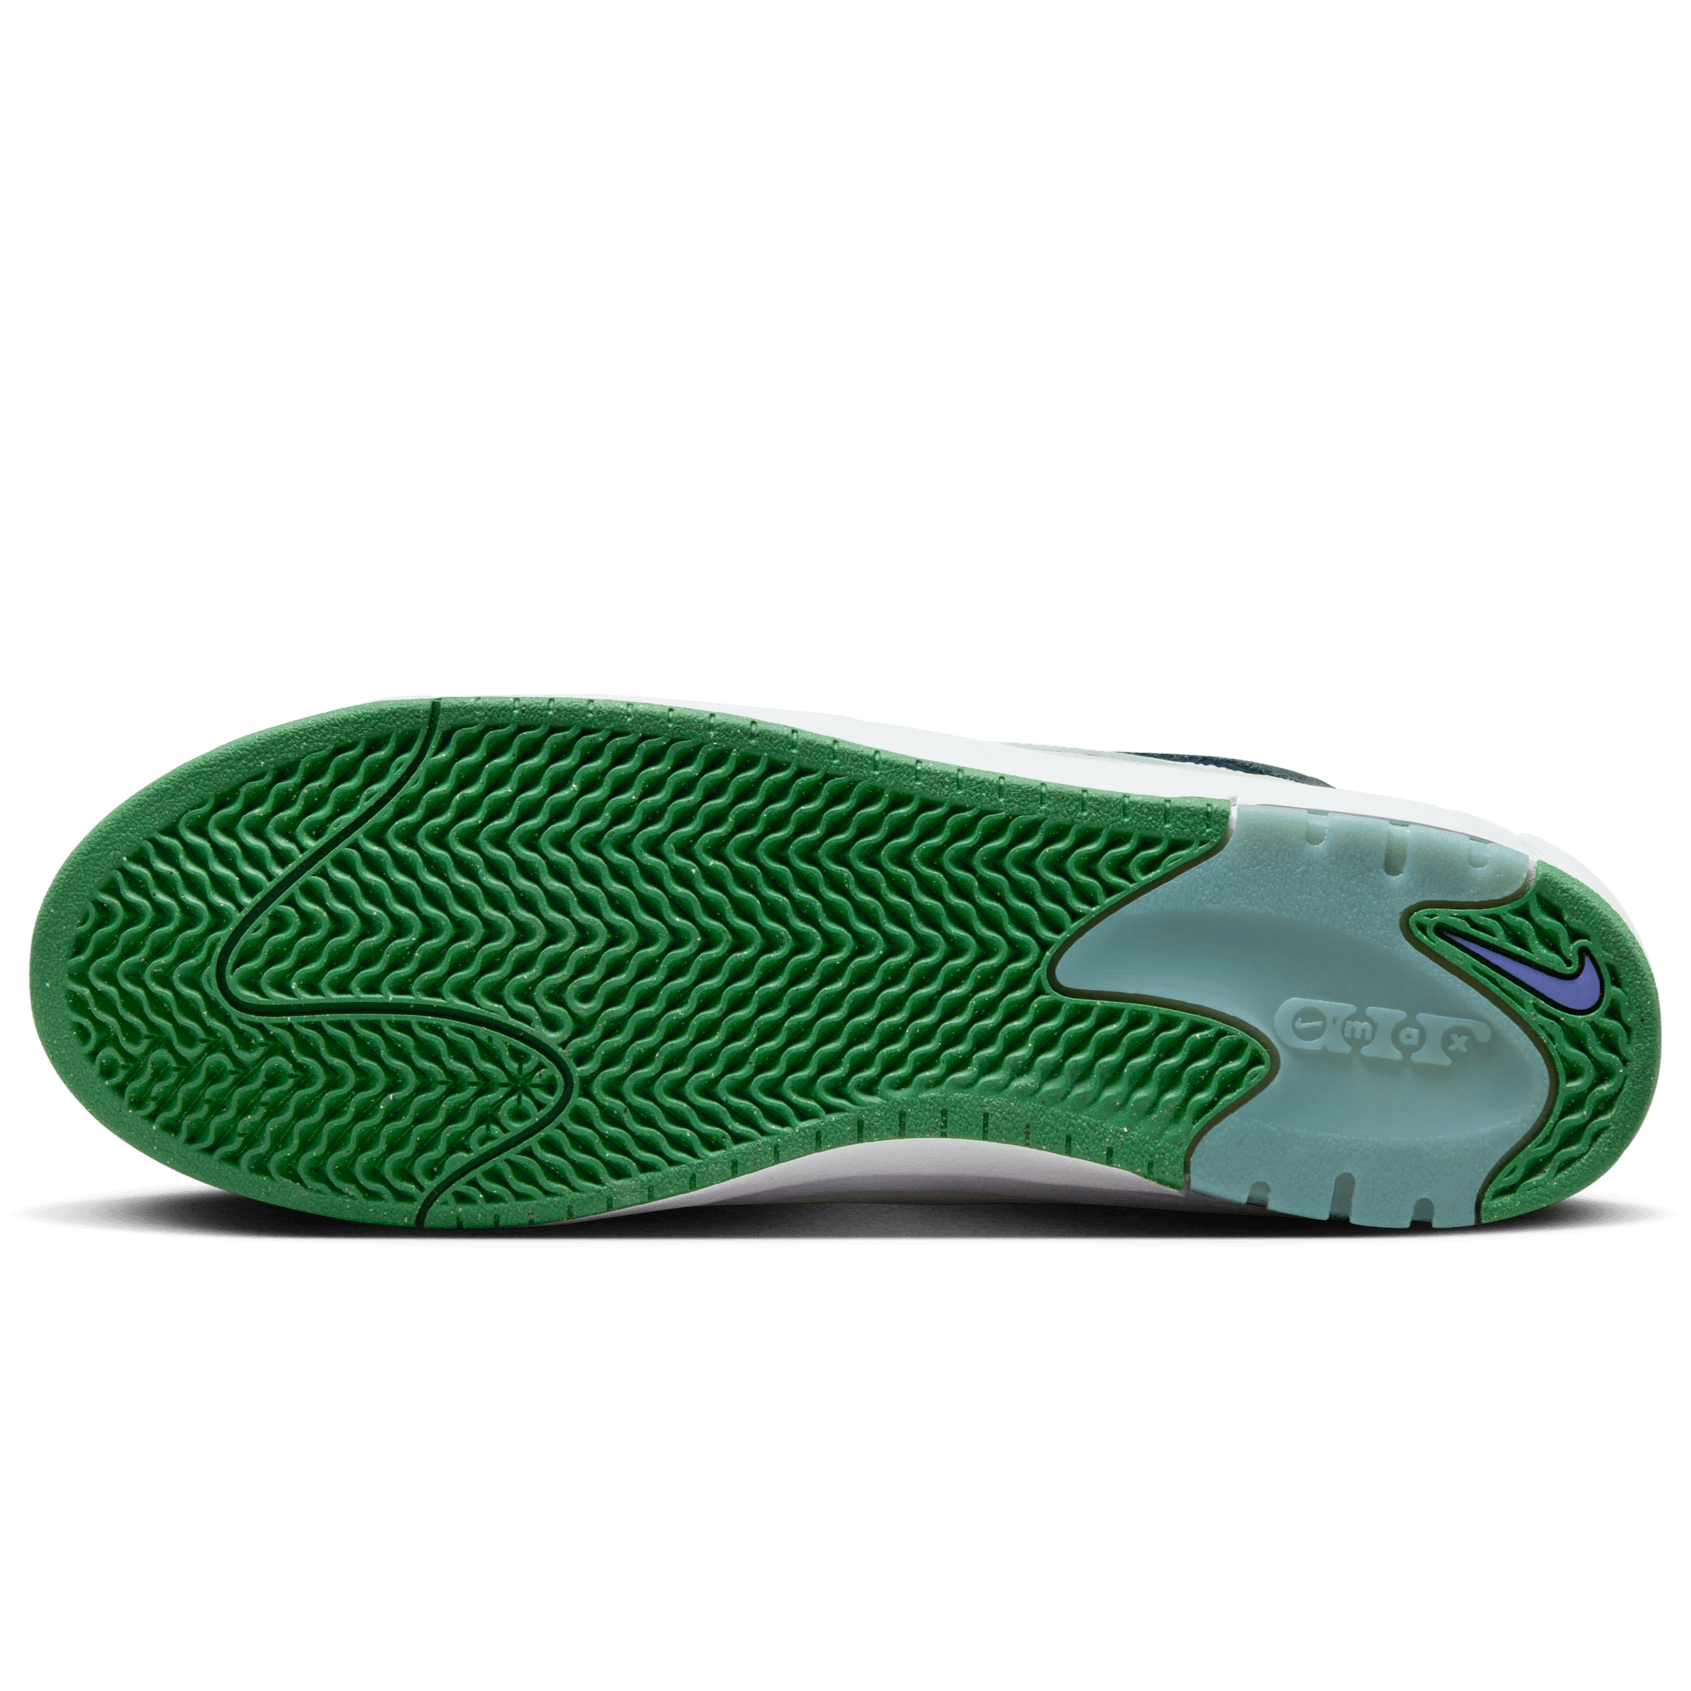 White/Obsidian Air Max Ishod Wair Nike SB Skate Shoe Bottom